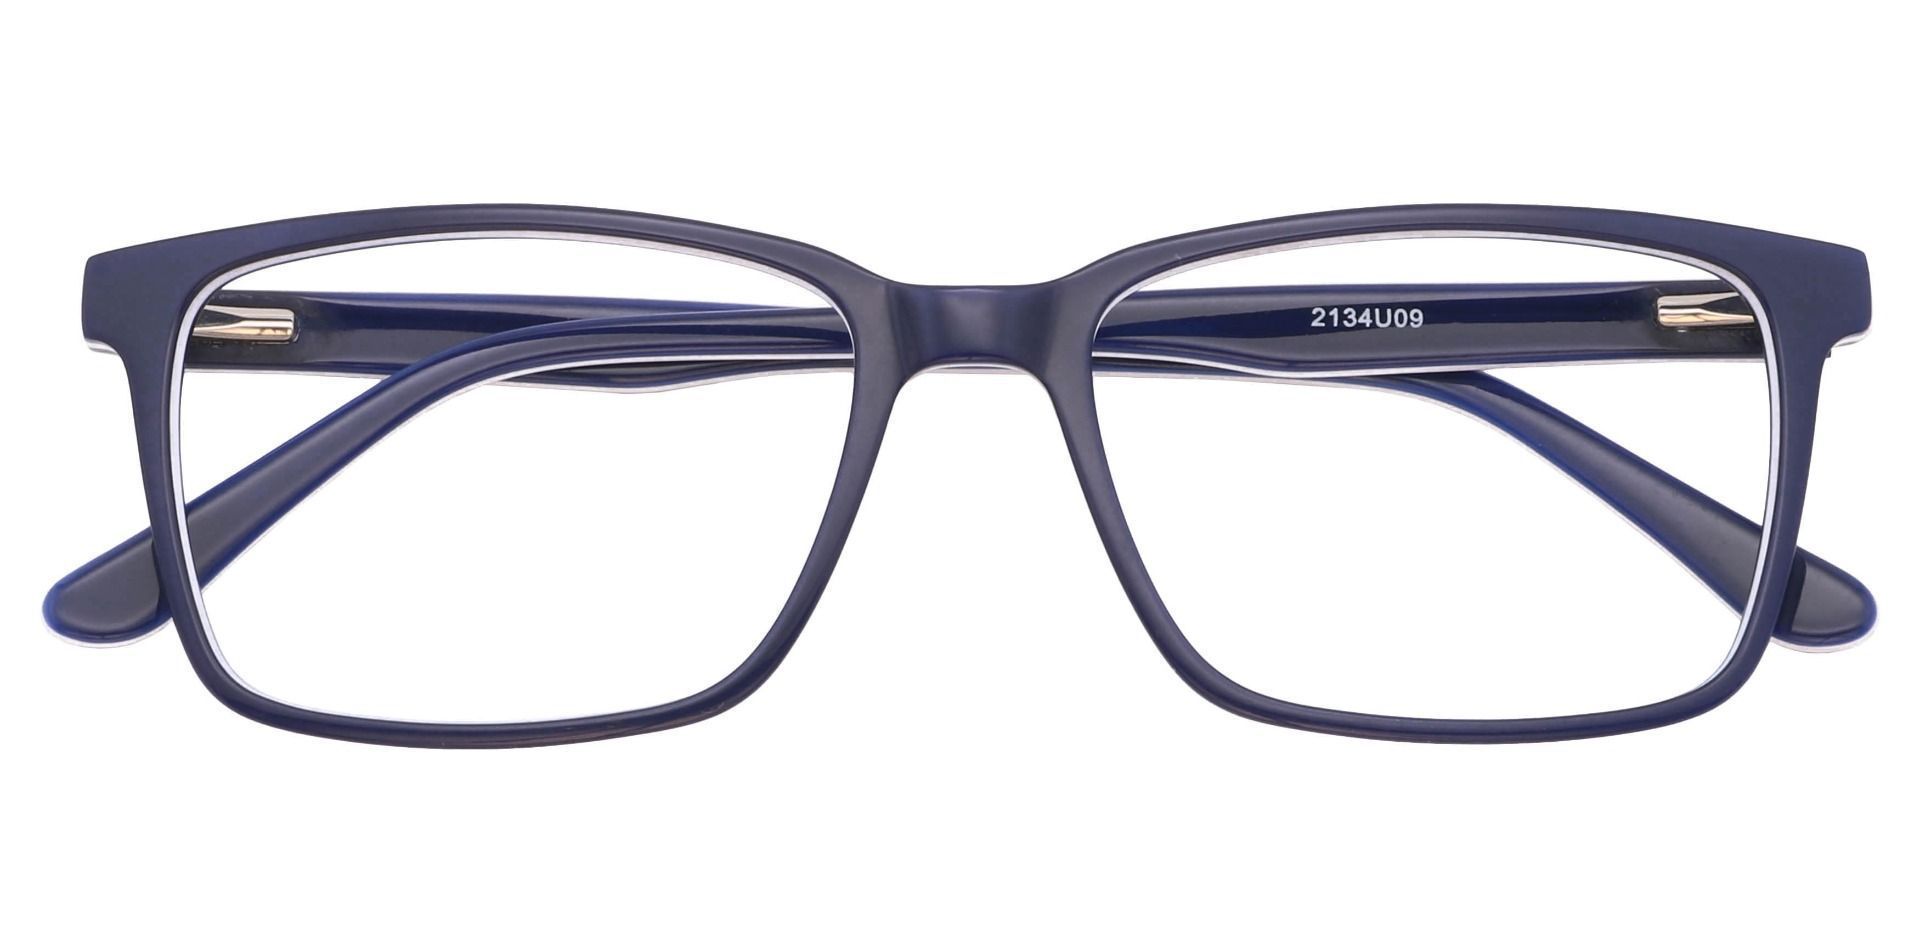 Venice Rectangle Lined Bifocal Glasses - Navy-white